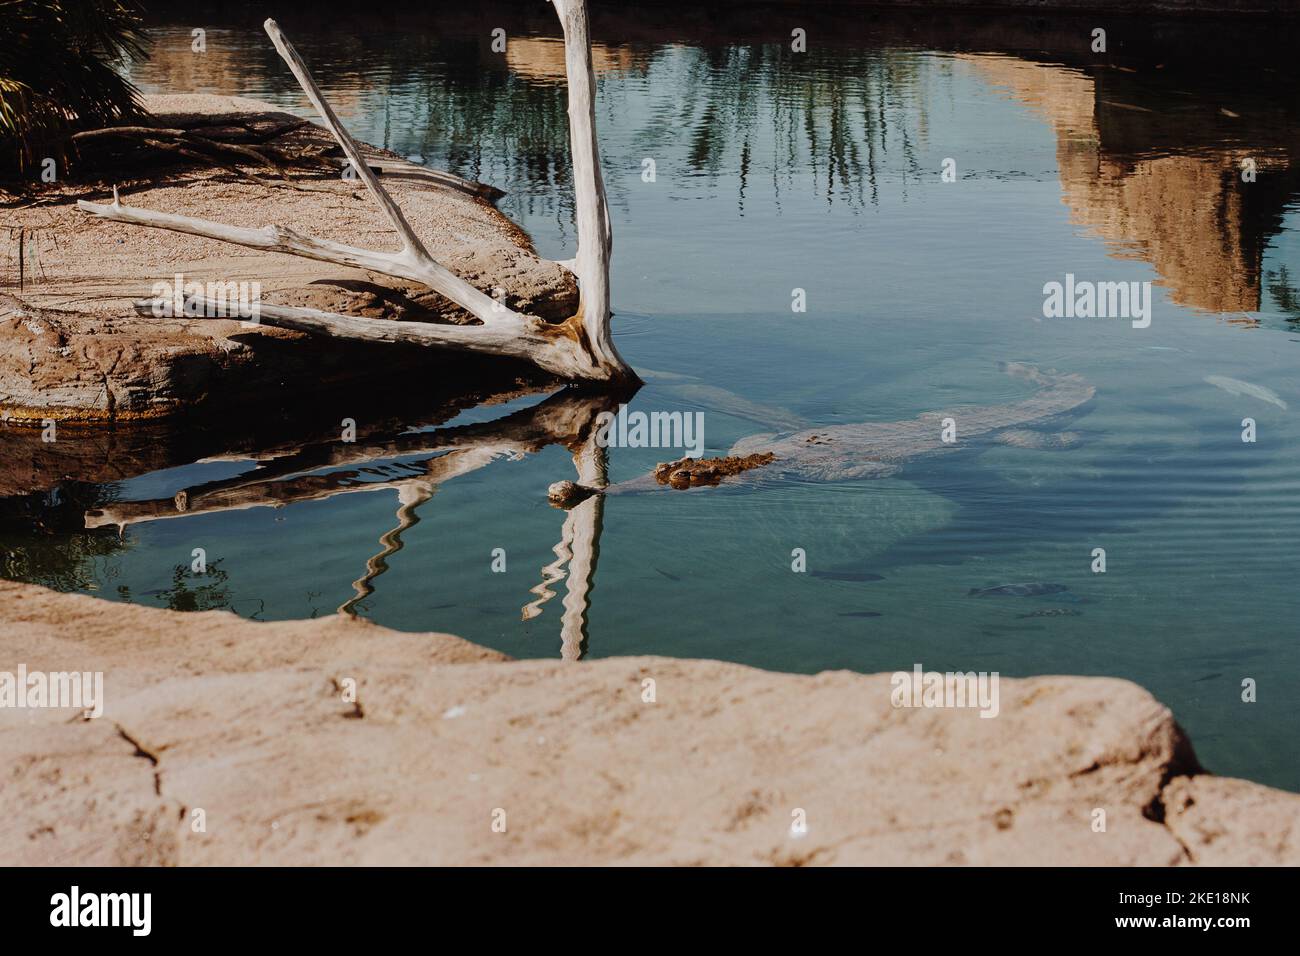 American Crocodile, Tarcoles River, Costa Rica. dangerous crocodile swimming in swamp Stock Photo